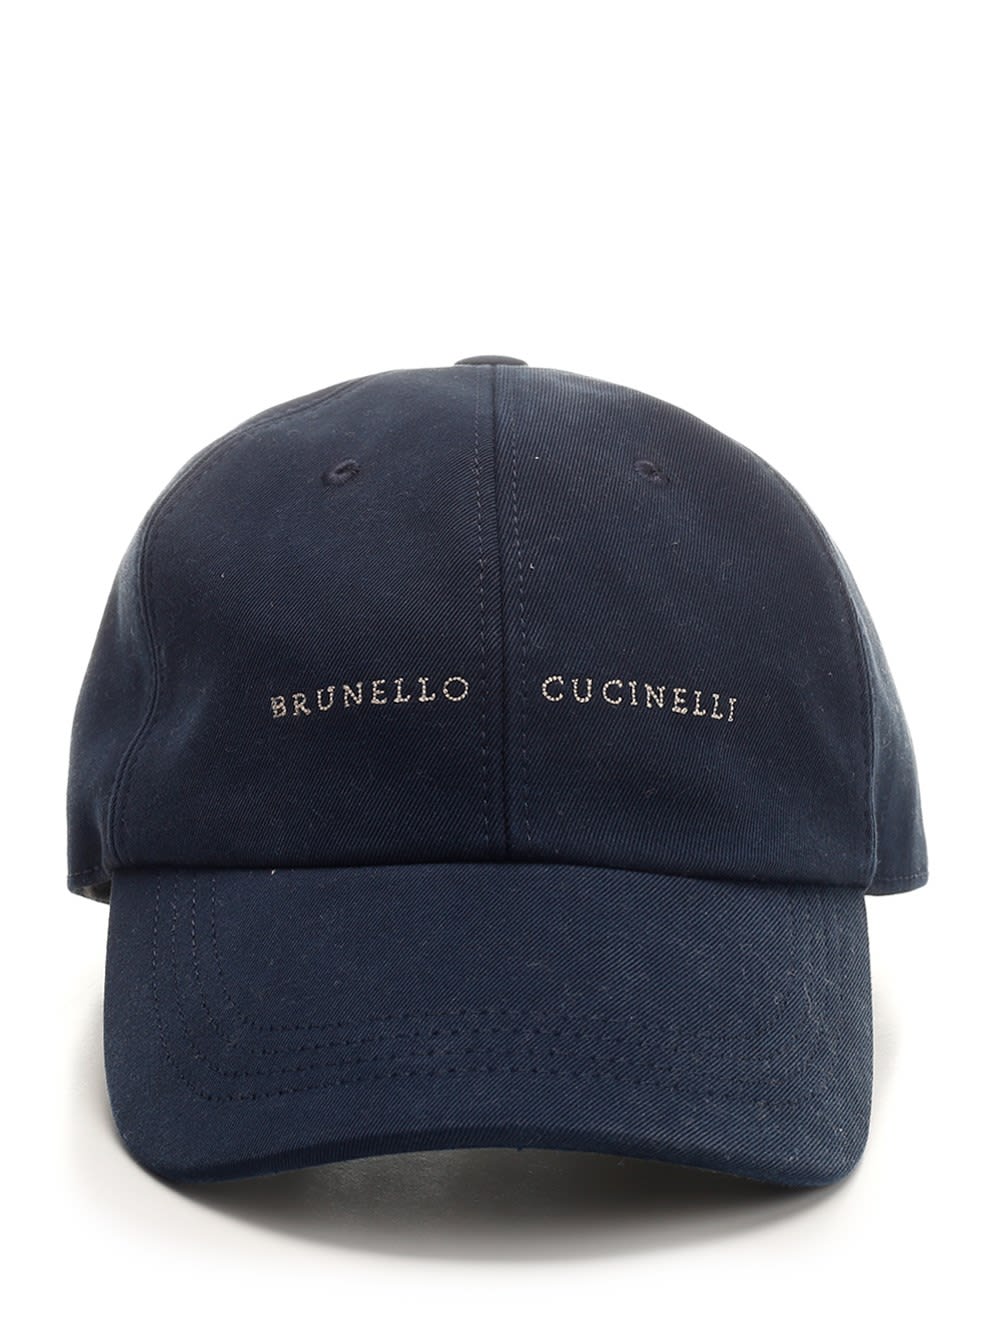 BRUNELLO CUCINELLI BASEBALL CAP